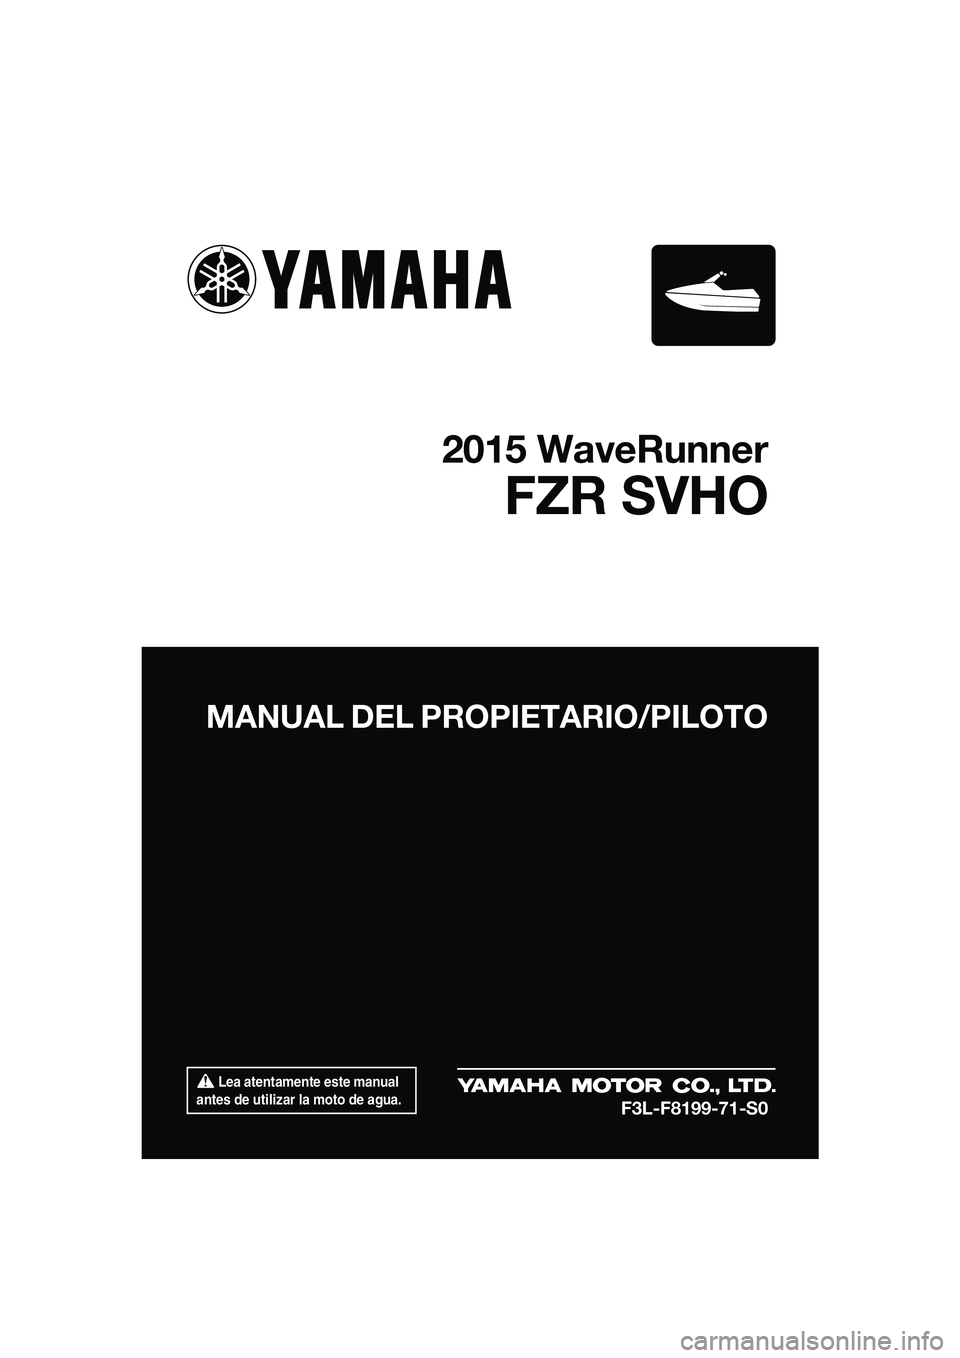 YAMAHA FZR SVHO 2015  Manuale de Empleo (in Spanish)  Lea atentamente este manual 
antes de utilizar la moto de agua.
MANUAL DEL PROPIETARIO/PILOTO
2015 WaveRunner
FZR SVHO
F3L-F8199-71-S0
UF3L71S0.book  Page 1  Friday, June 20, 2014  2:22 PM 